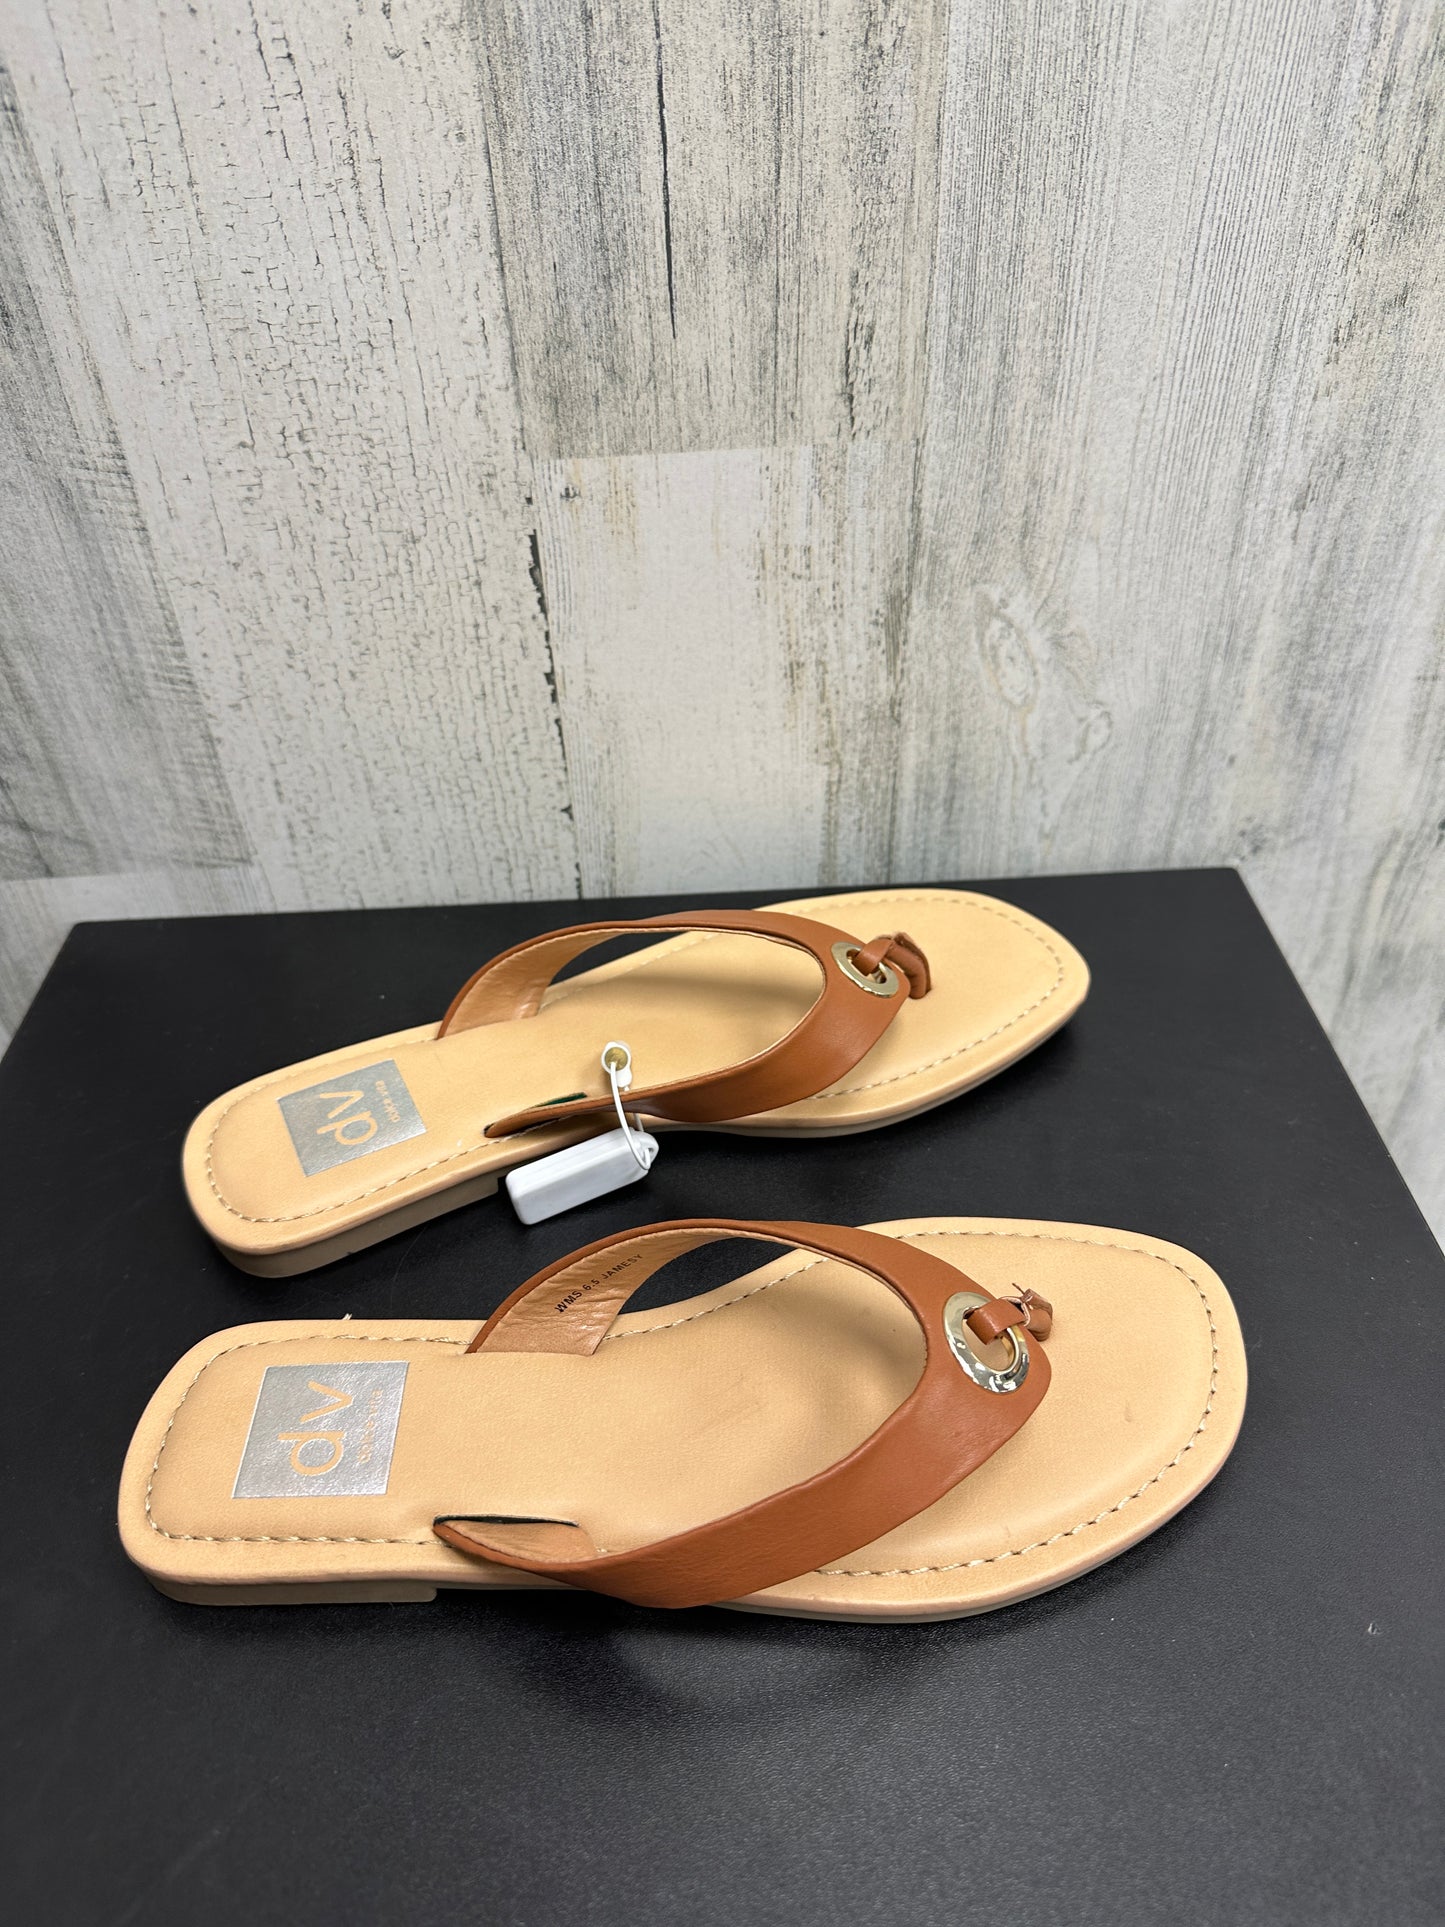 Sandals Flip Flops By Dolce Vita  Size: 7.5